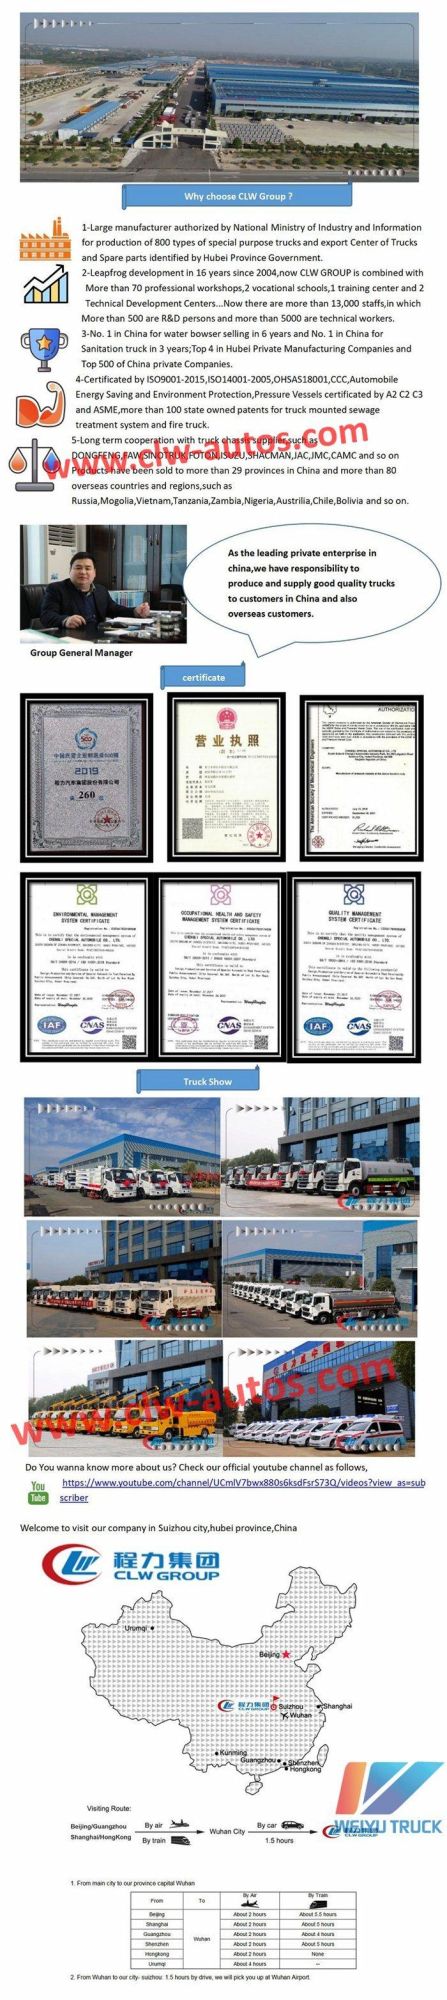 China Ambulance Supplier Gasoline Engine Foton G9 Hospital Medical Ambulance Patient Transfer Ambulance